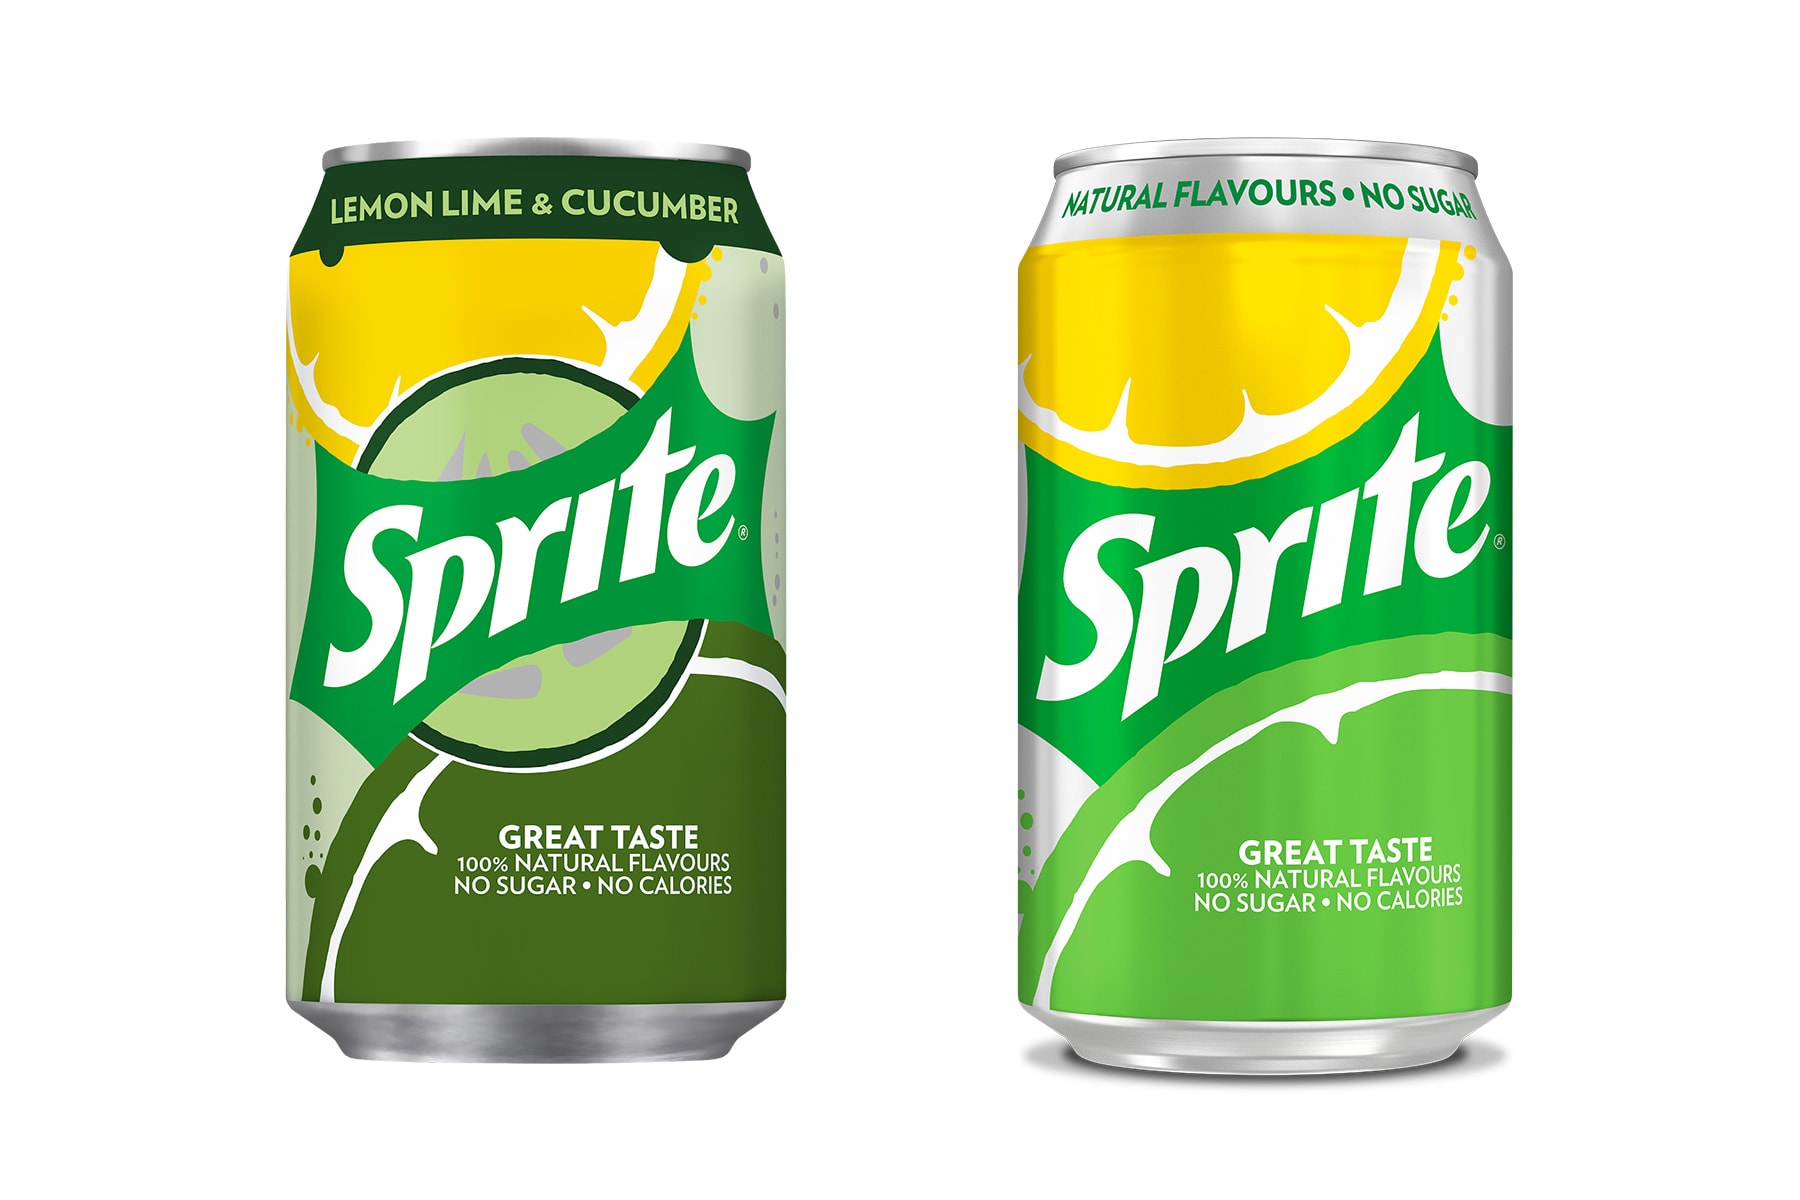 Sprite Cucumber Flavor Coca-Cola Britain Soft Drinks Fizzy Drinks Coke Lemon Lime & Cucumber For Sale Availability Remix Can Merchandise Commercial